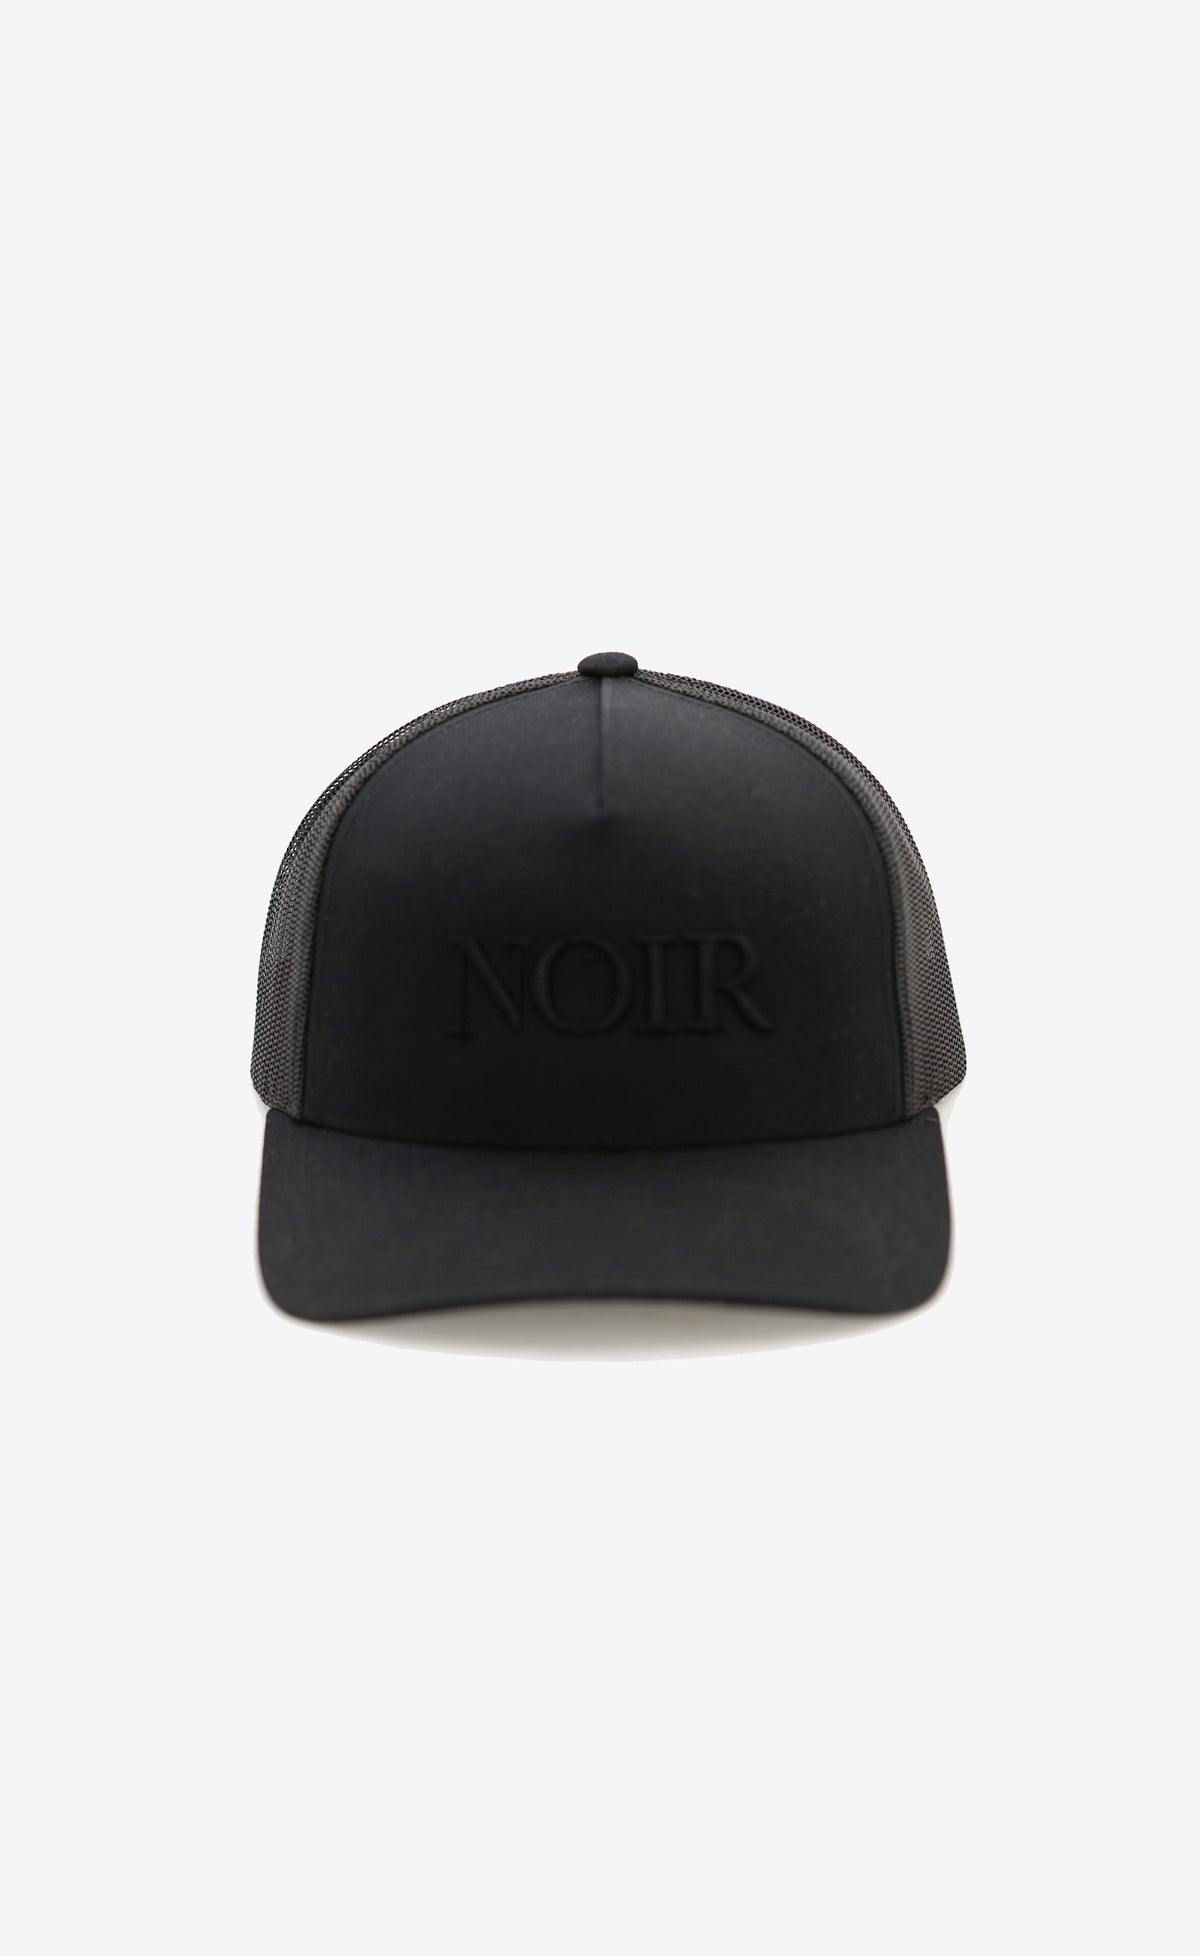 Noir Trucker Hat Black